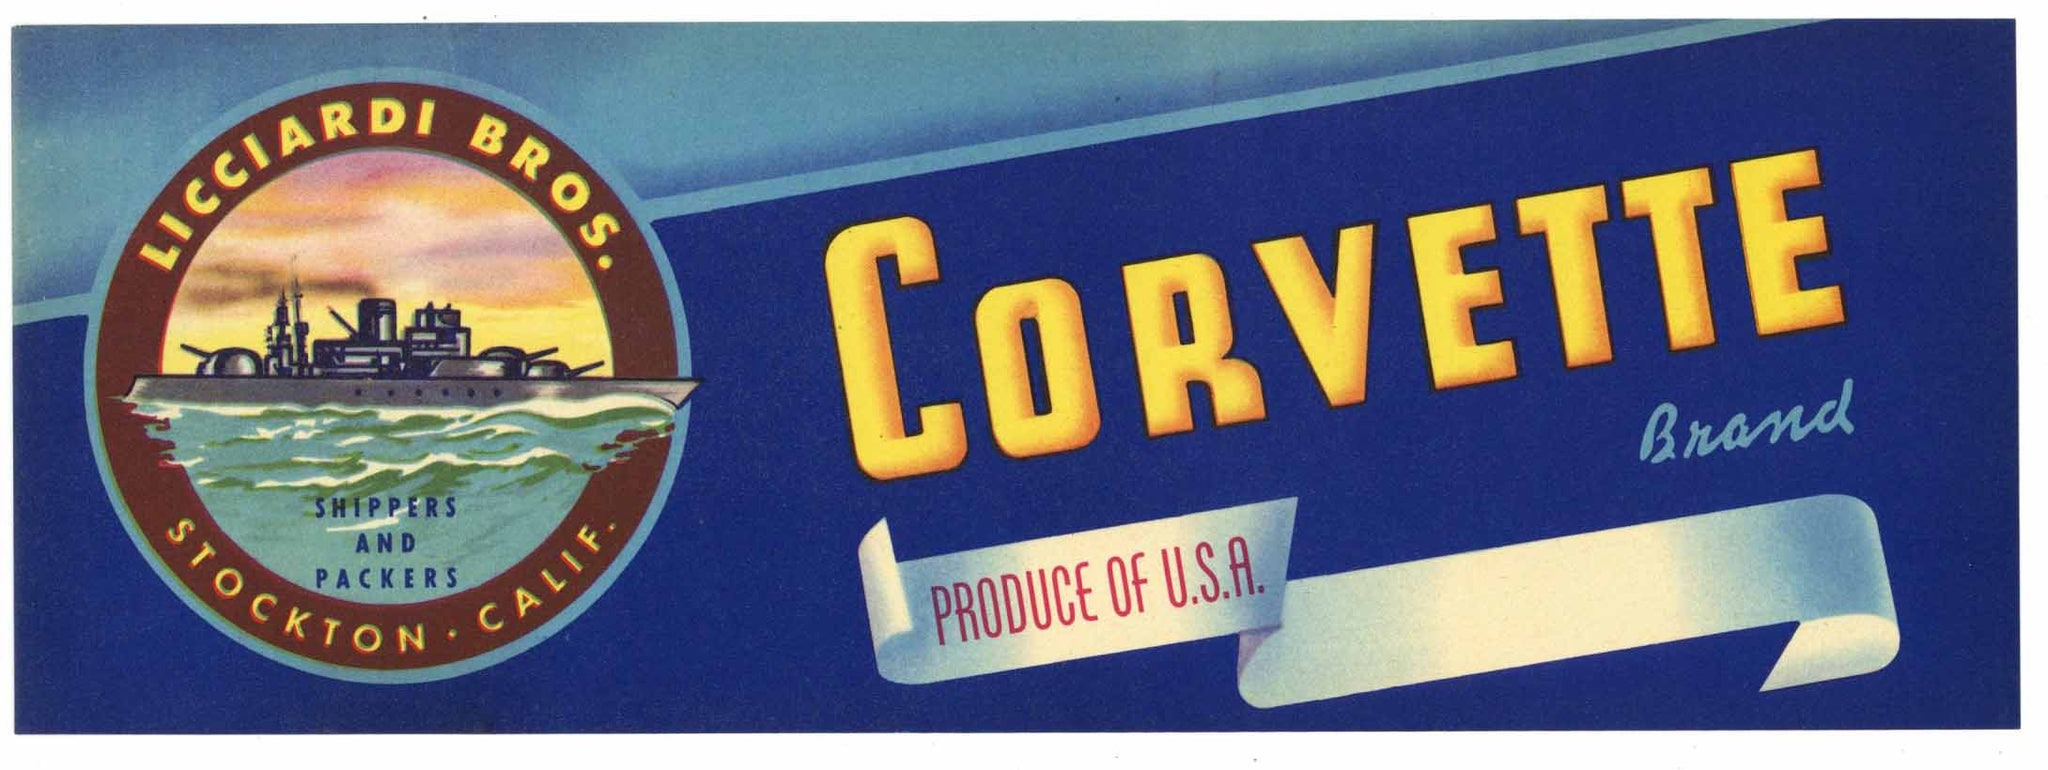 Corvette Brand Vintage Stockton Produce Crate Label